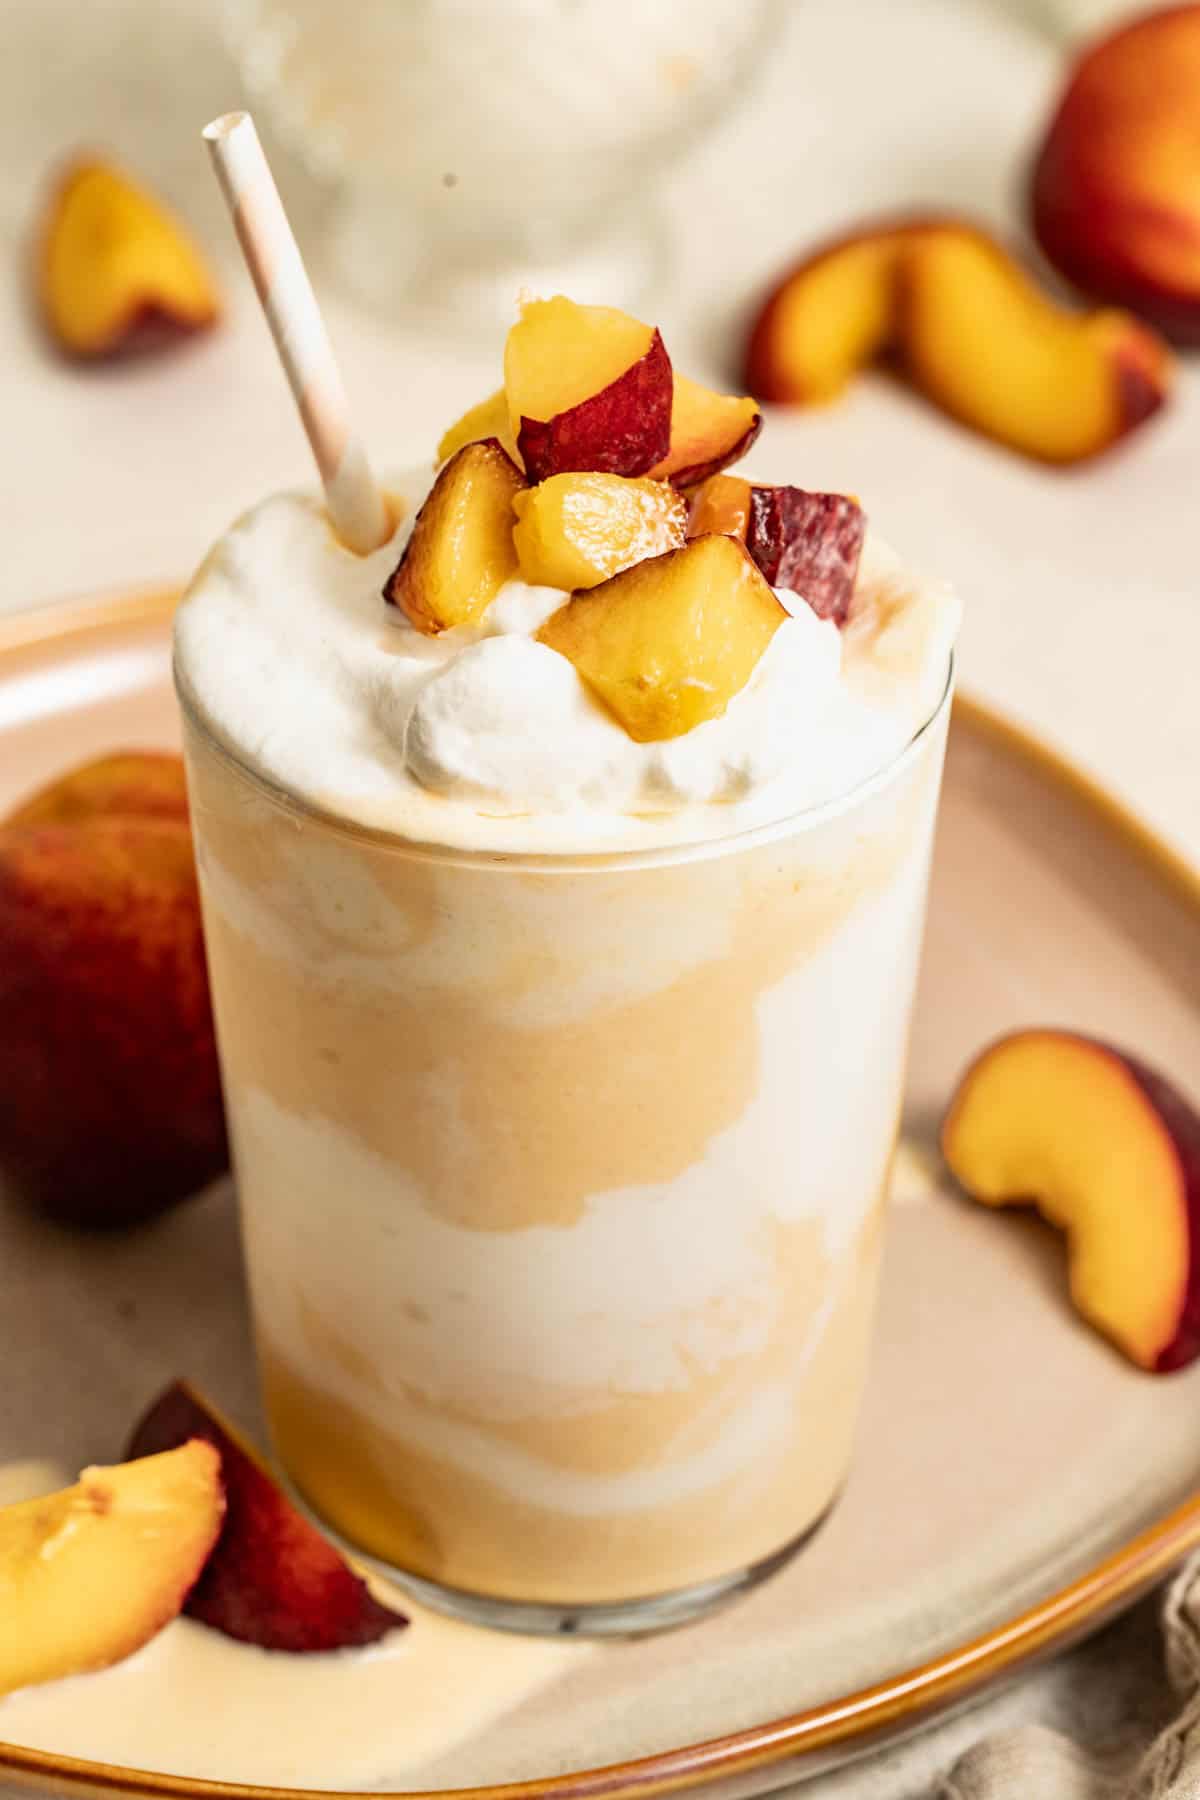 Cream and peaches swirled through a milkshake, on a beige plate with fresh peaches around it.